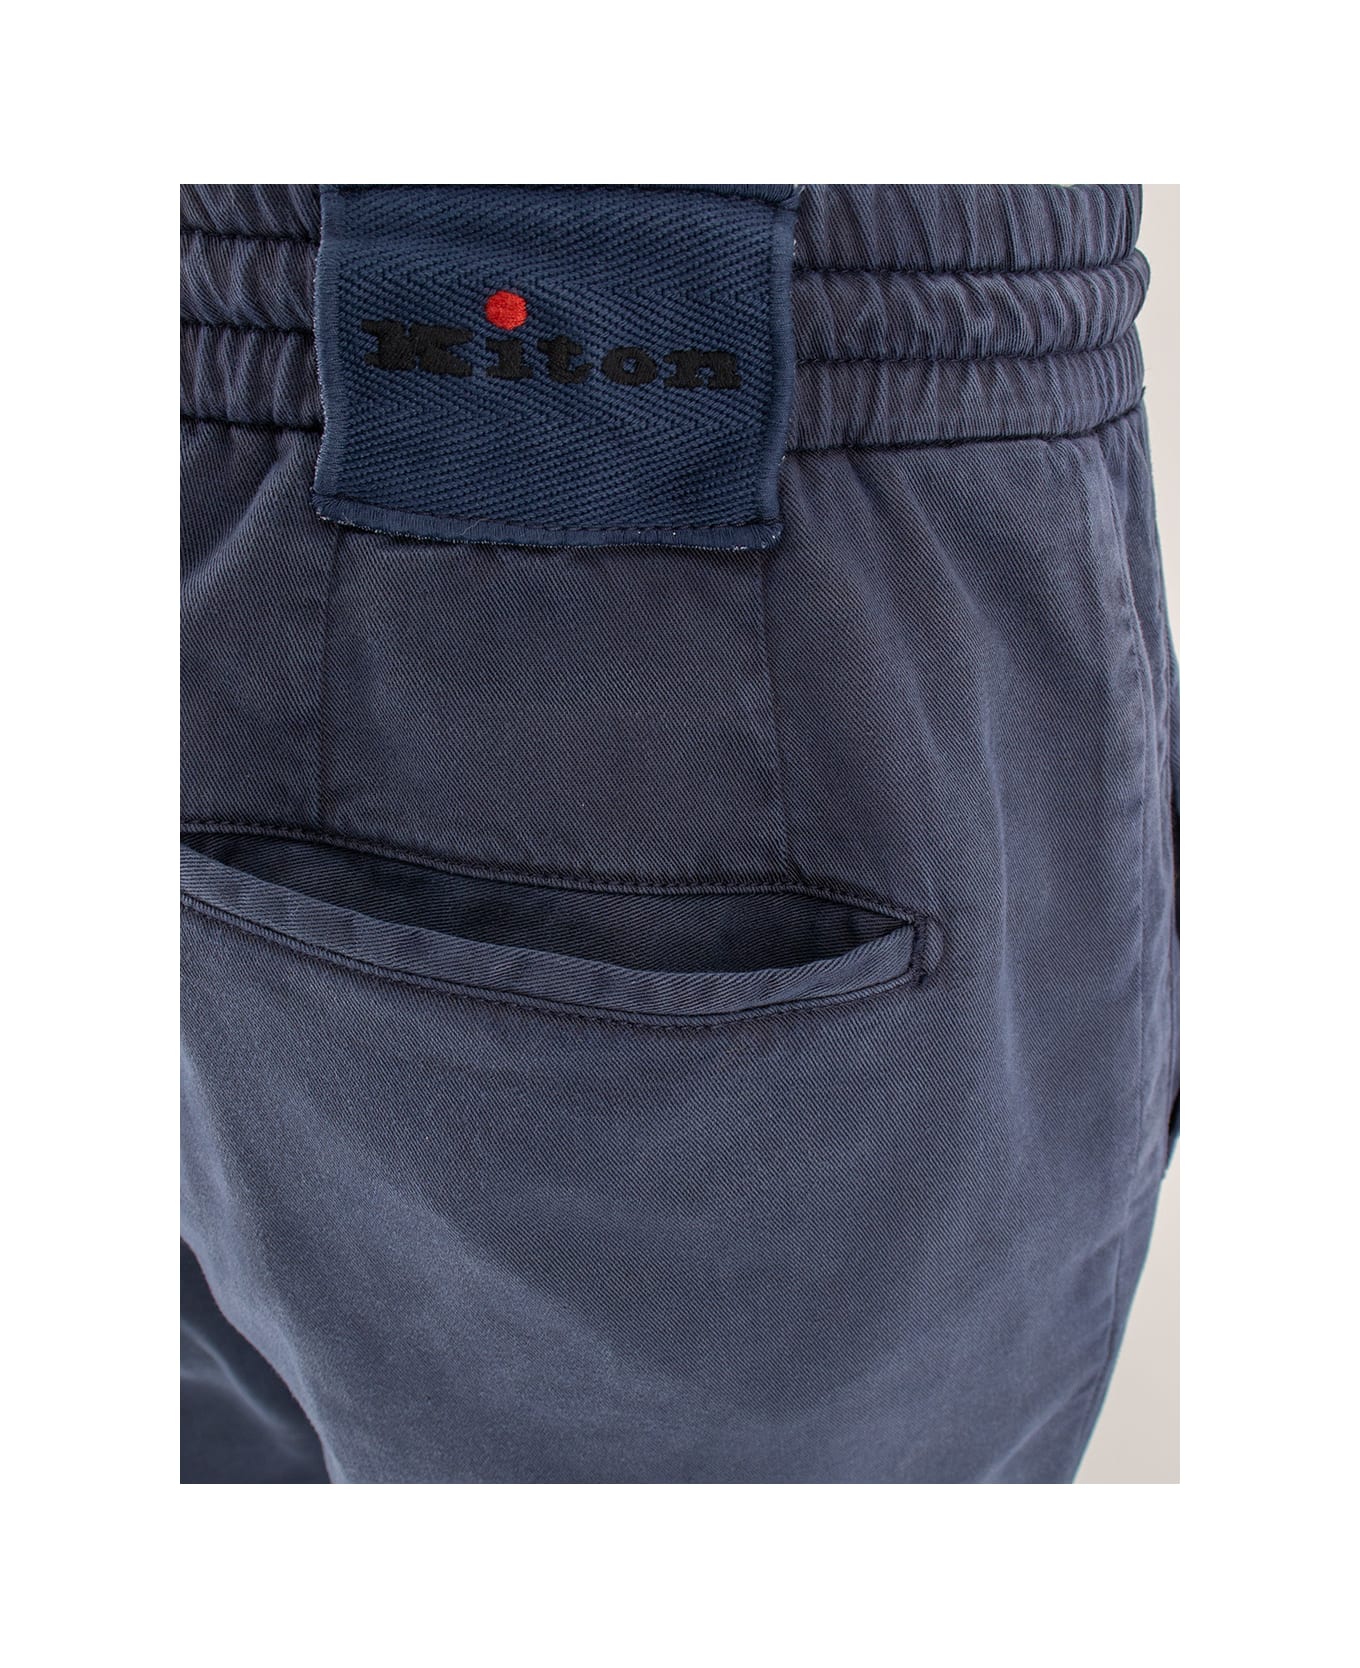 Kiton Trousers - NAVY BLUE